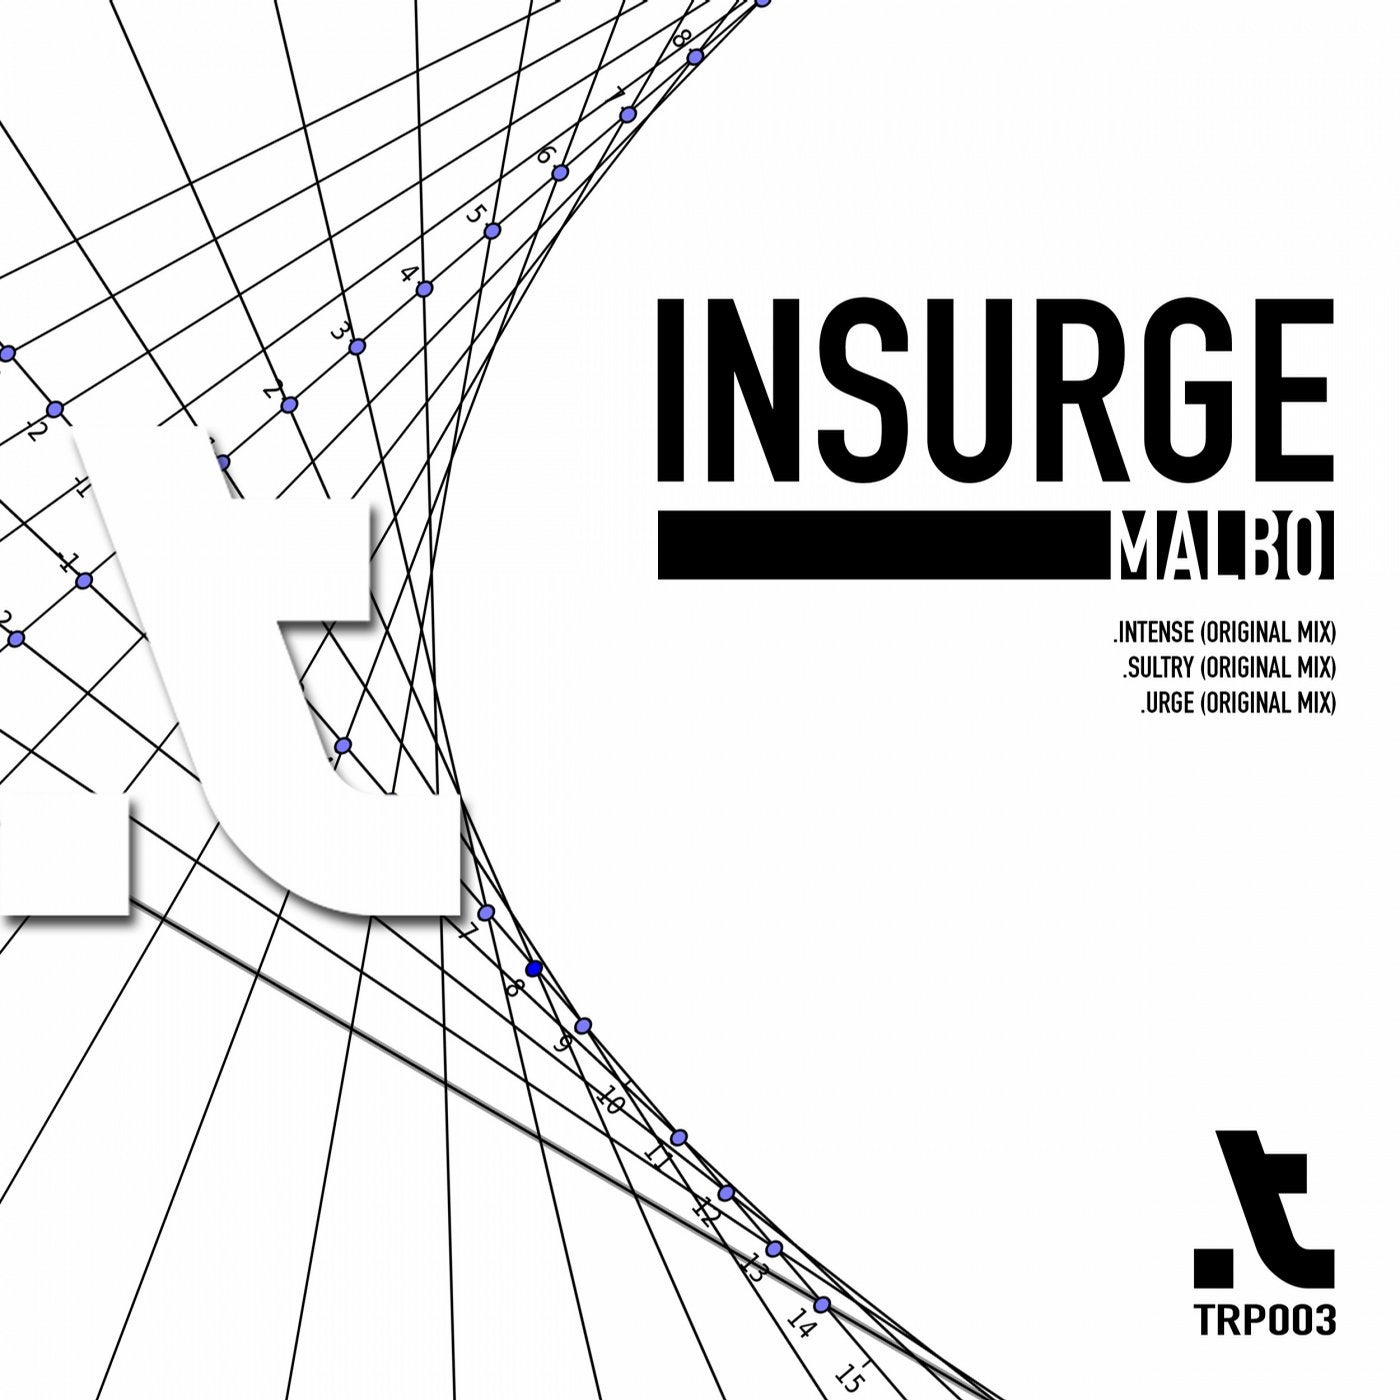 Insurge